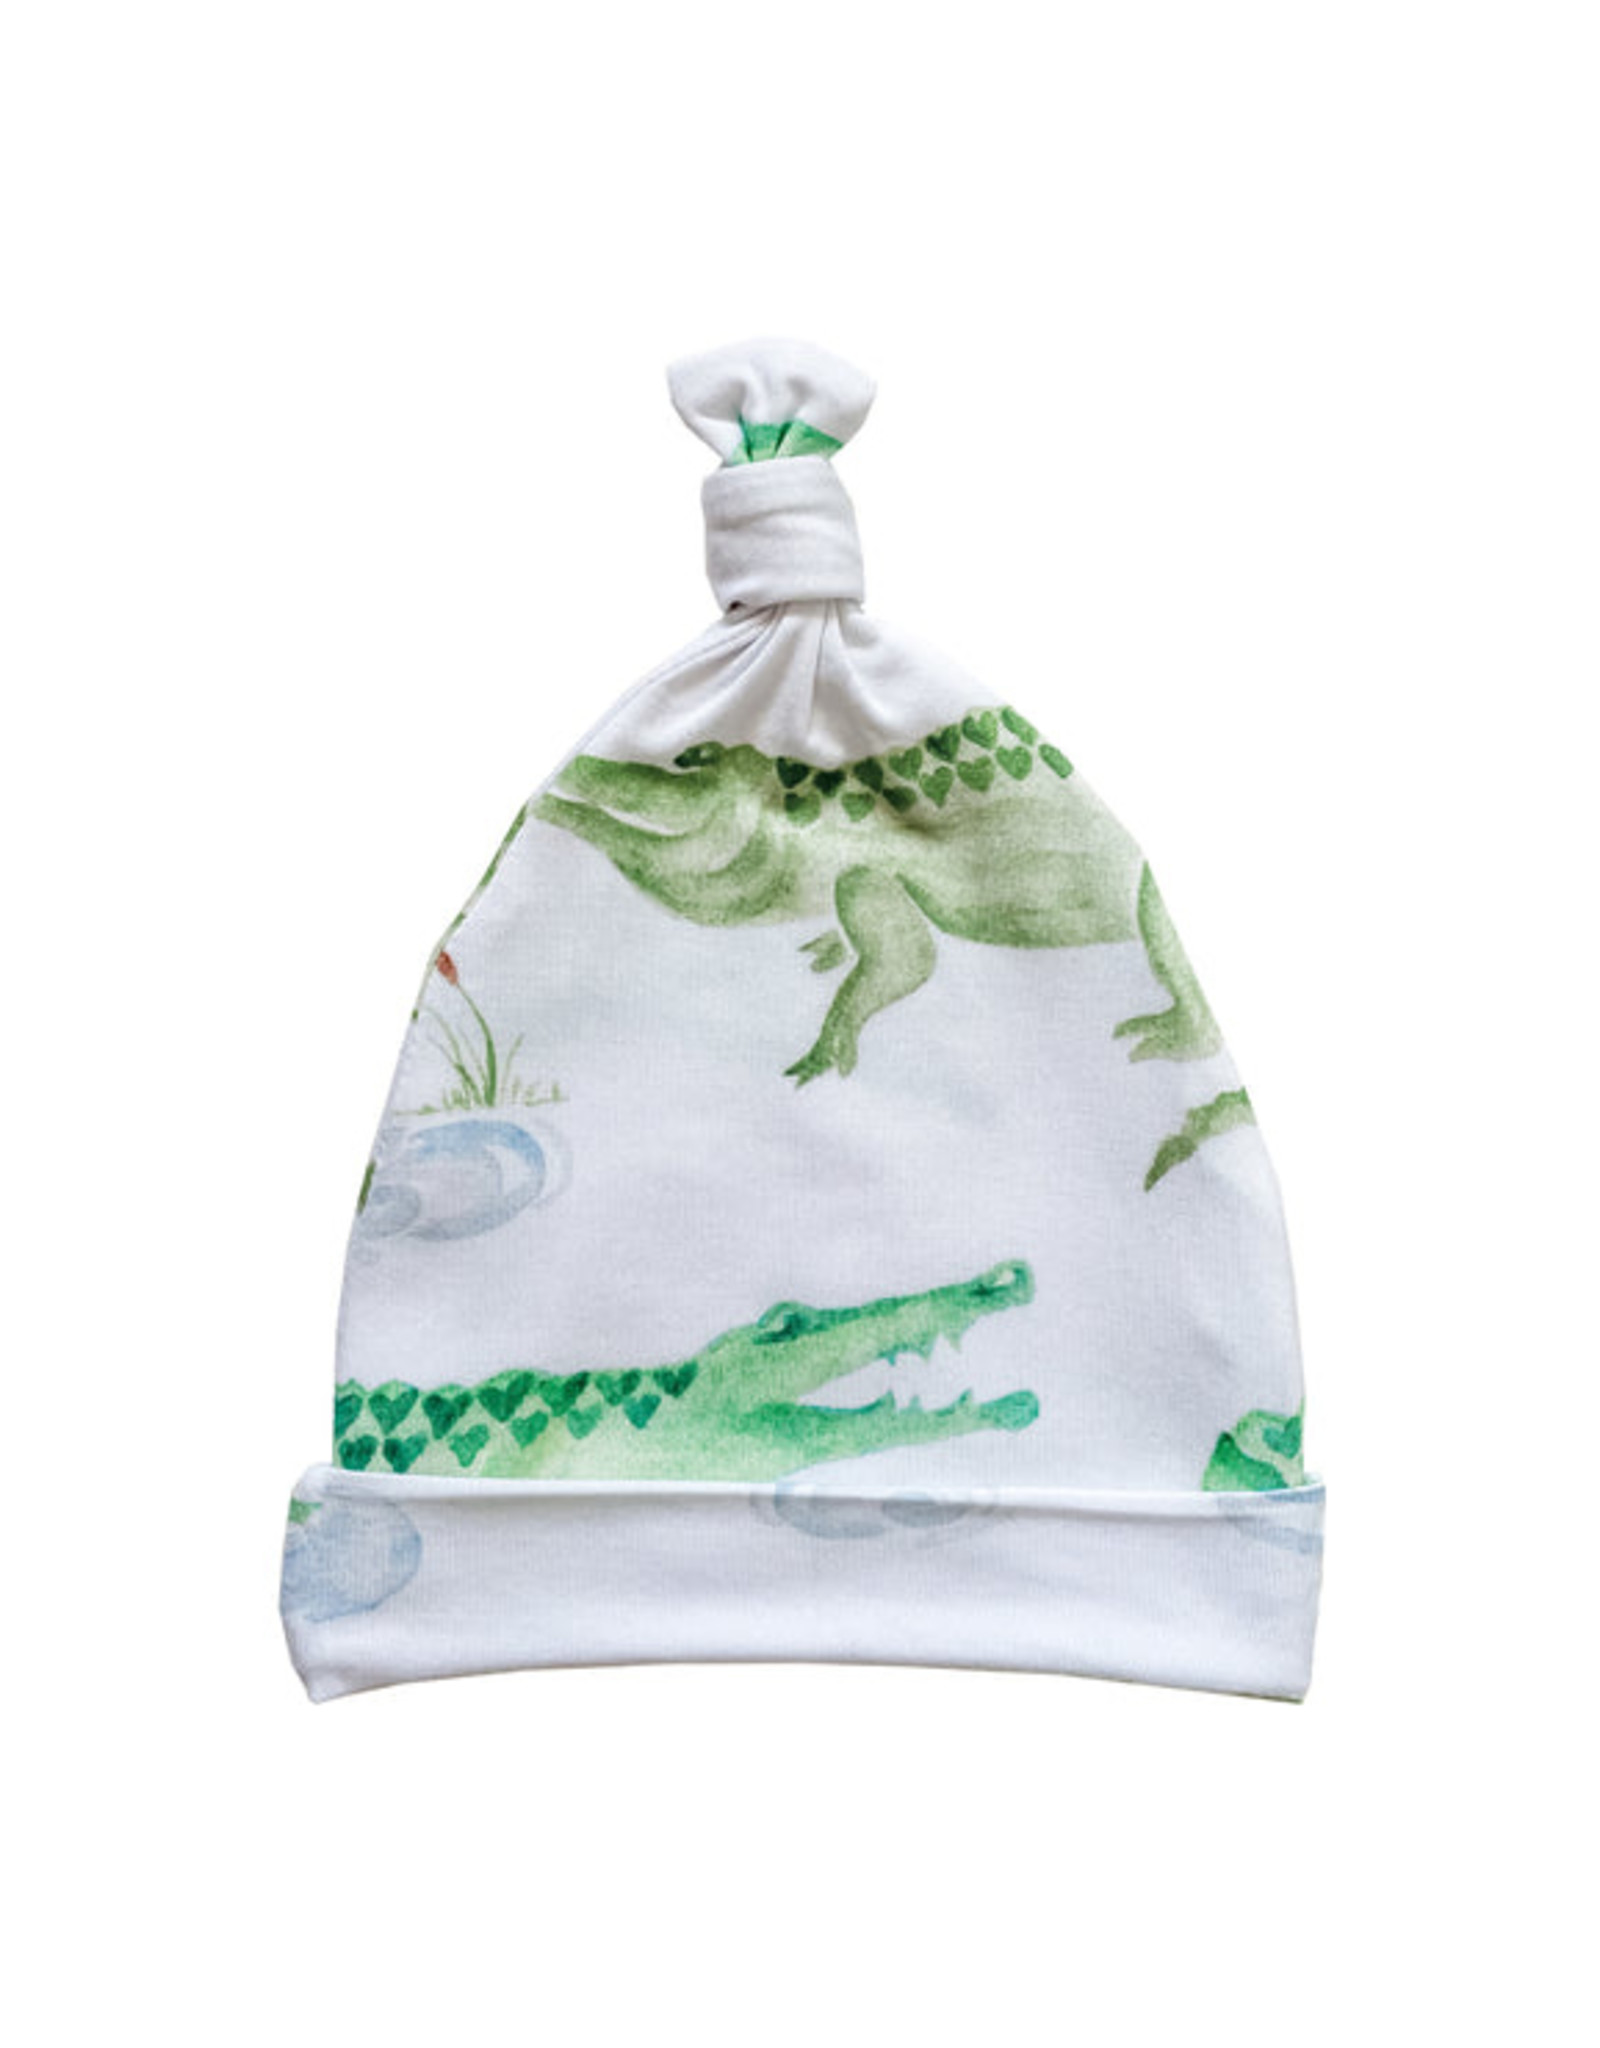 Florida Kid Co. Alligator Newborn Knotted Gown & Hat Set